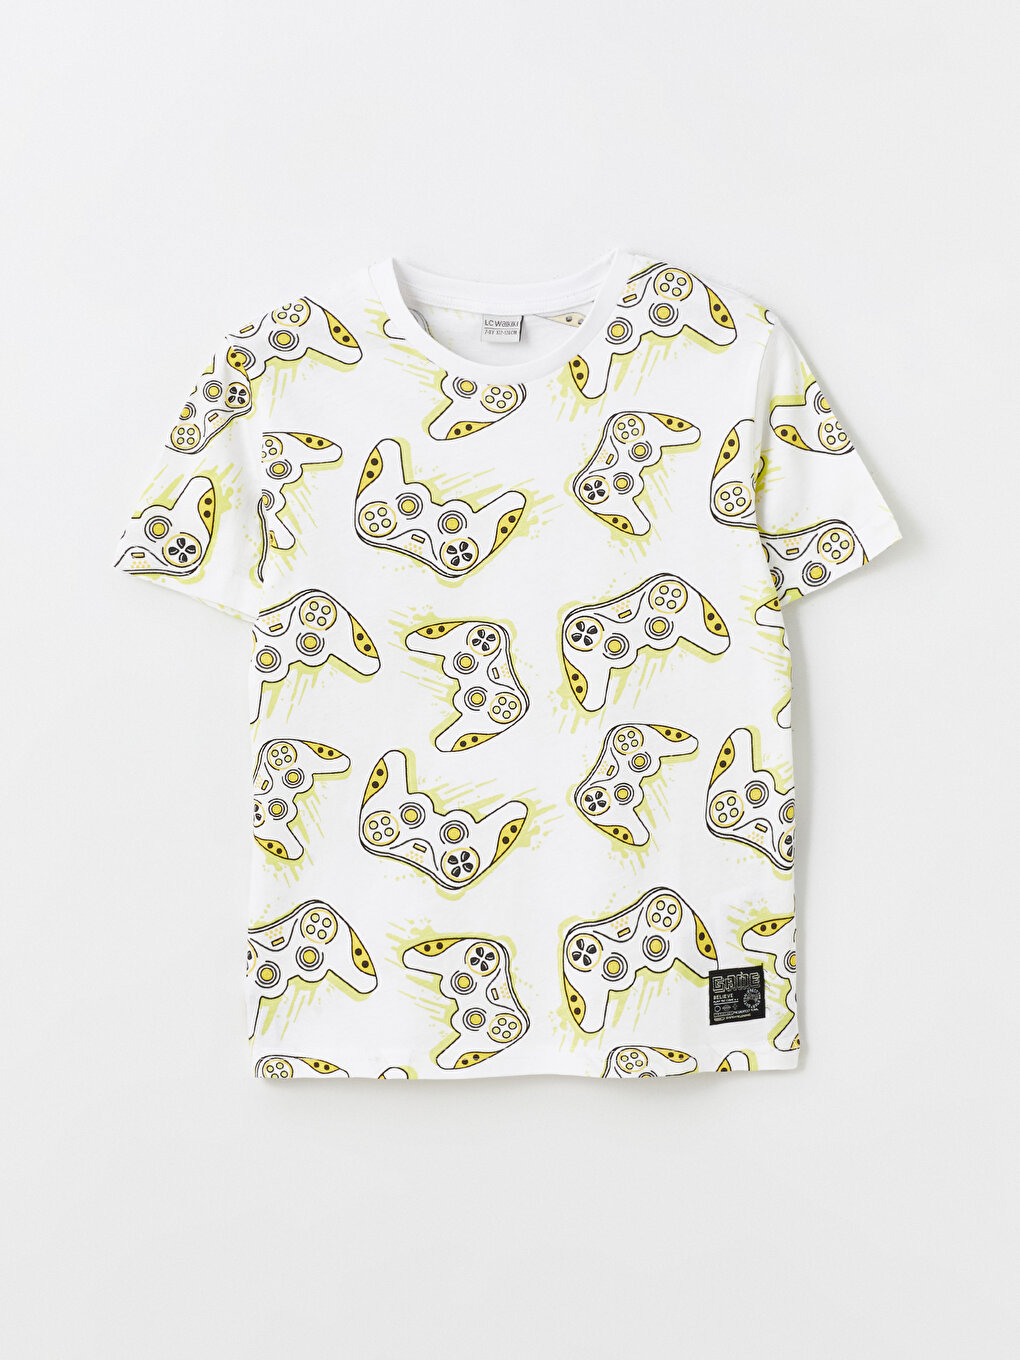 Crew Neck Printed Short Sleeve Boy T-Shirt -S46979Z4-VE4 